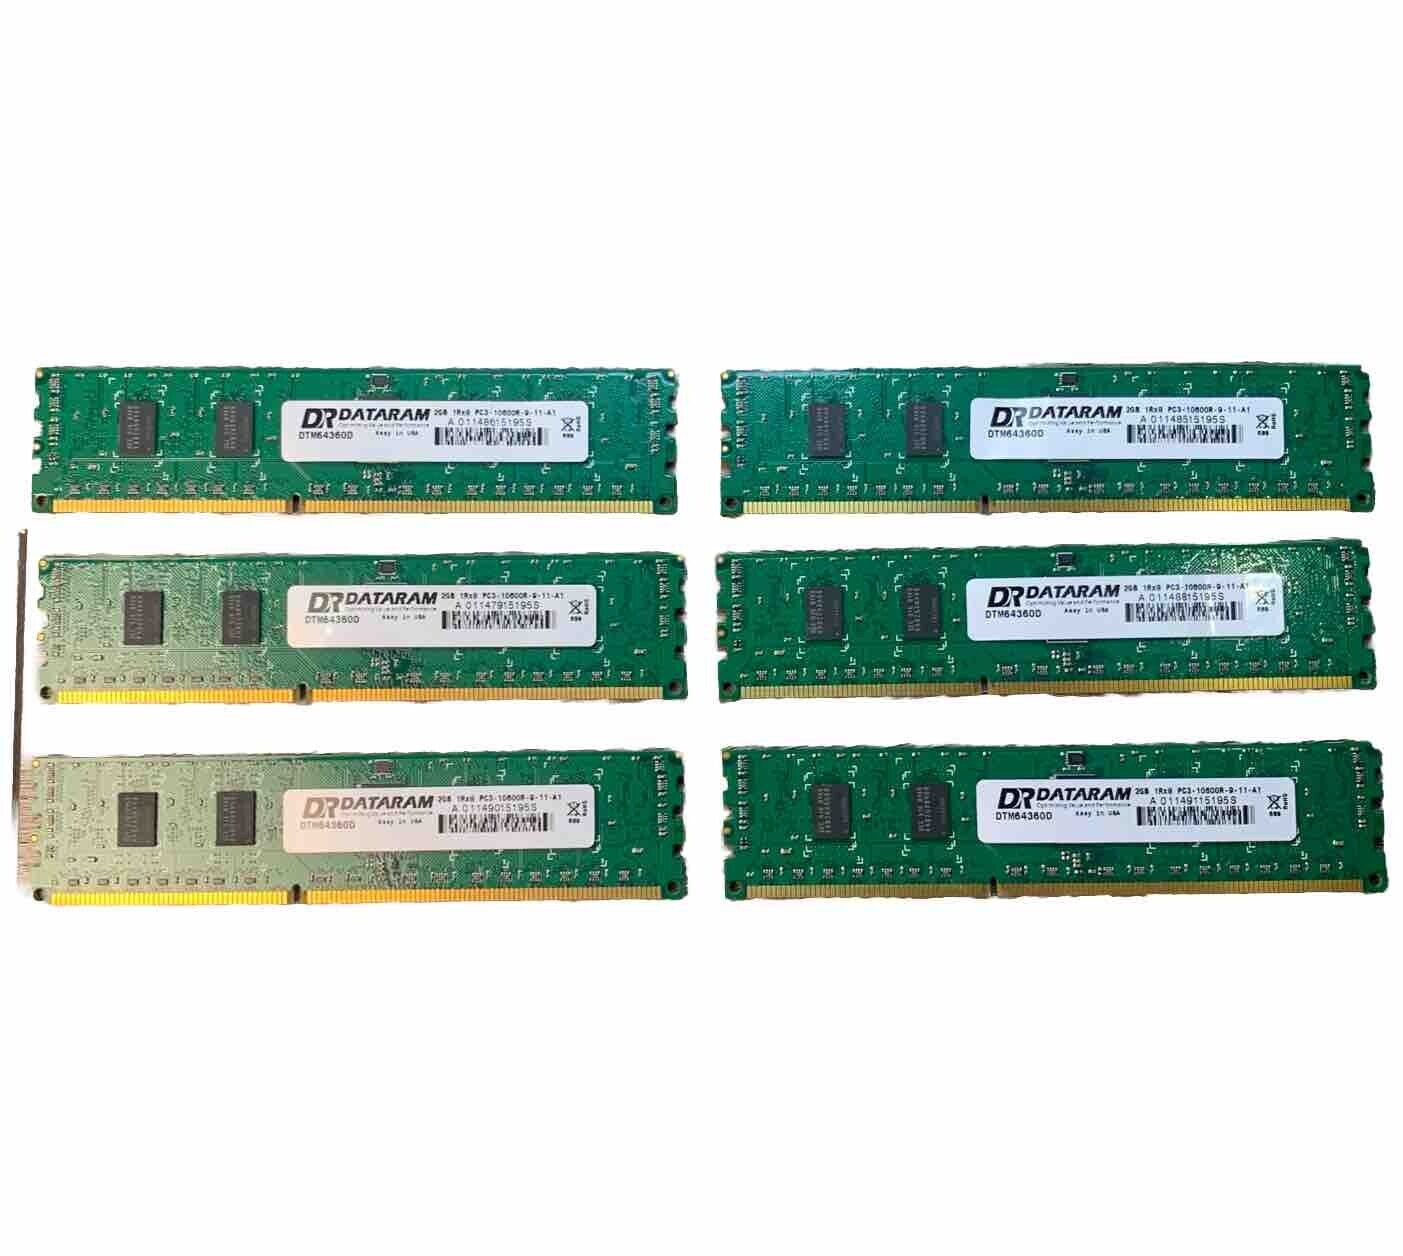 Lot of 6 2GB (12GB) DATARAM DTM64360D PC3-10600R-9-11-A1 Ram Sticks